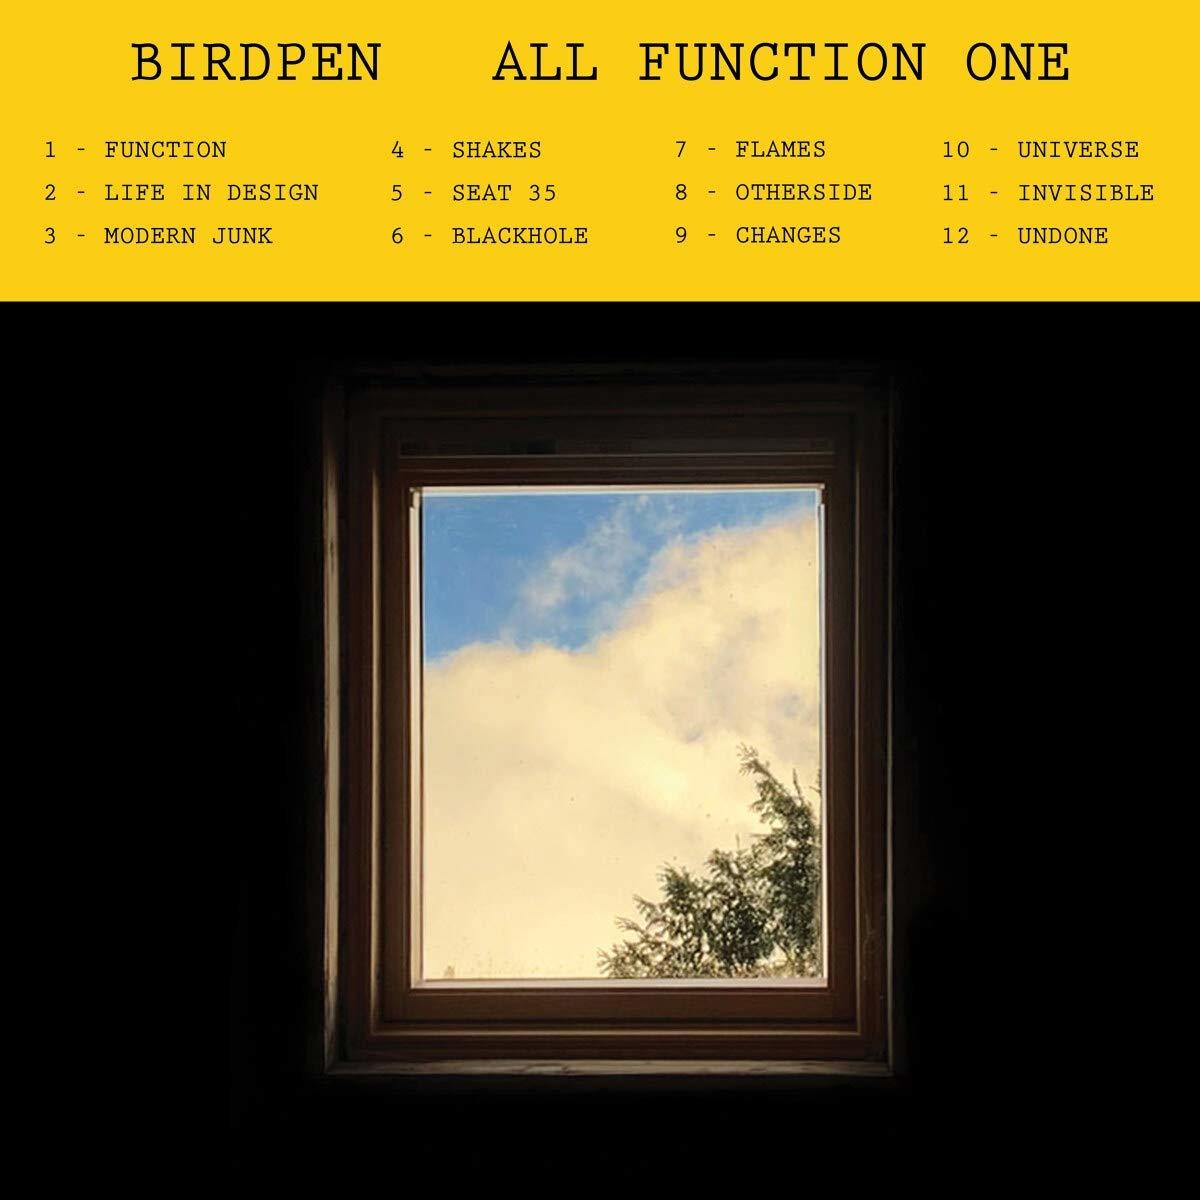 Birdpen - All (CD) One Function 